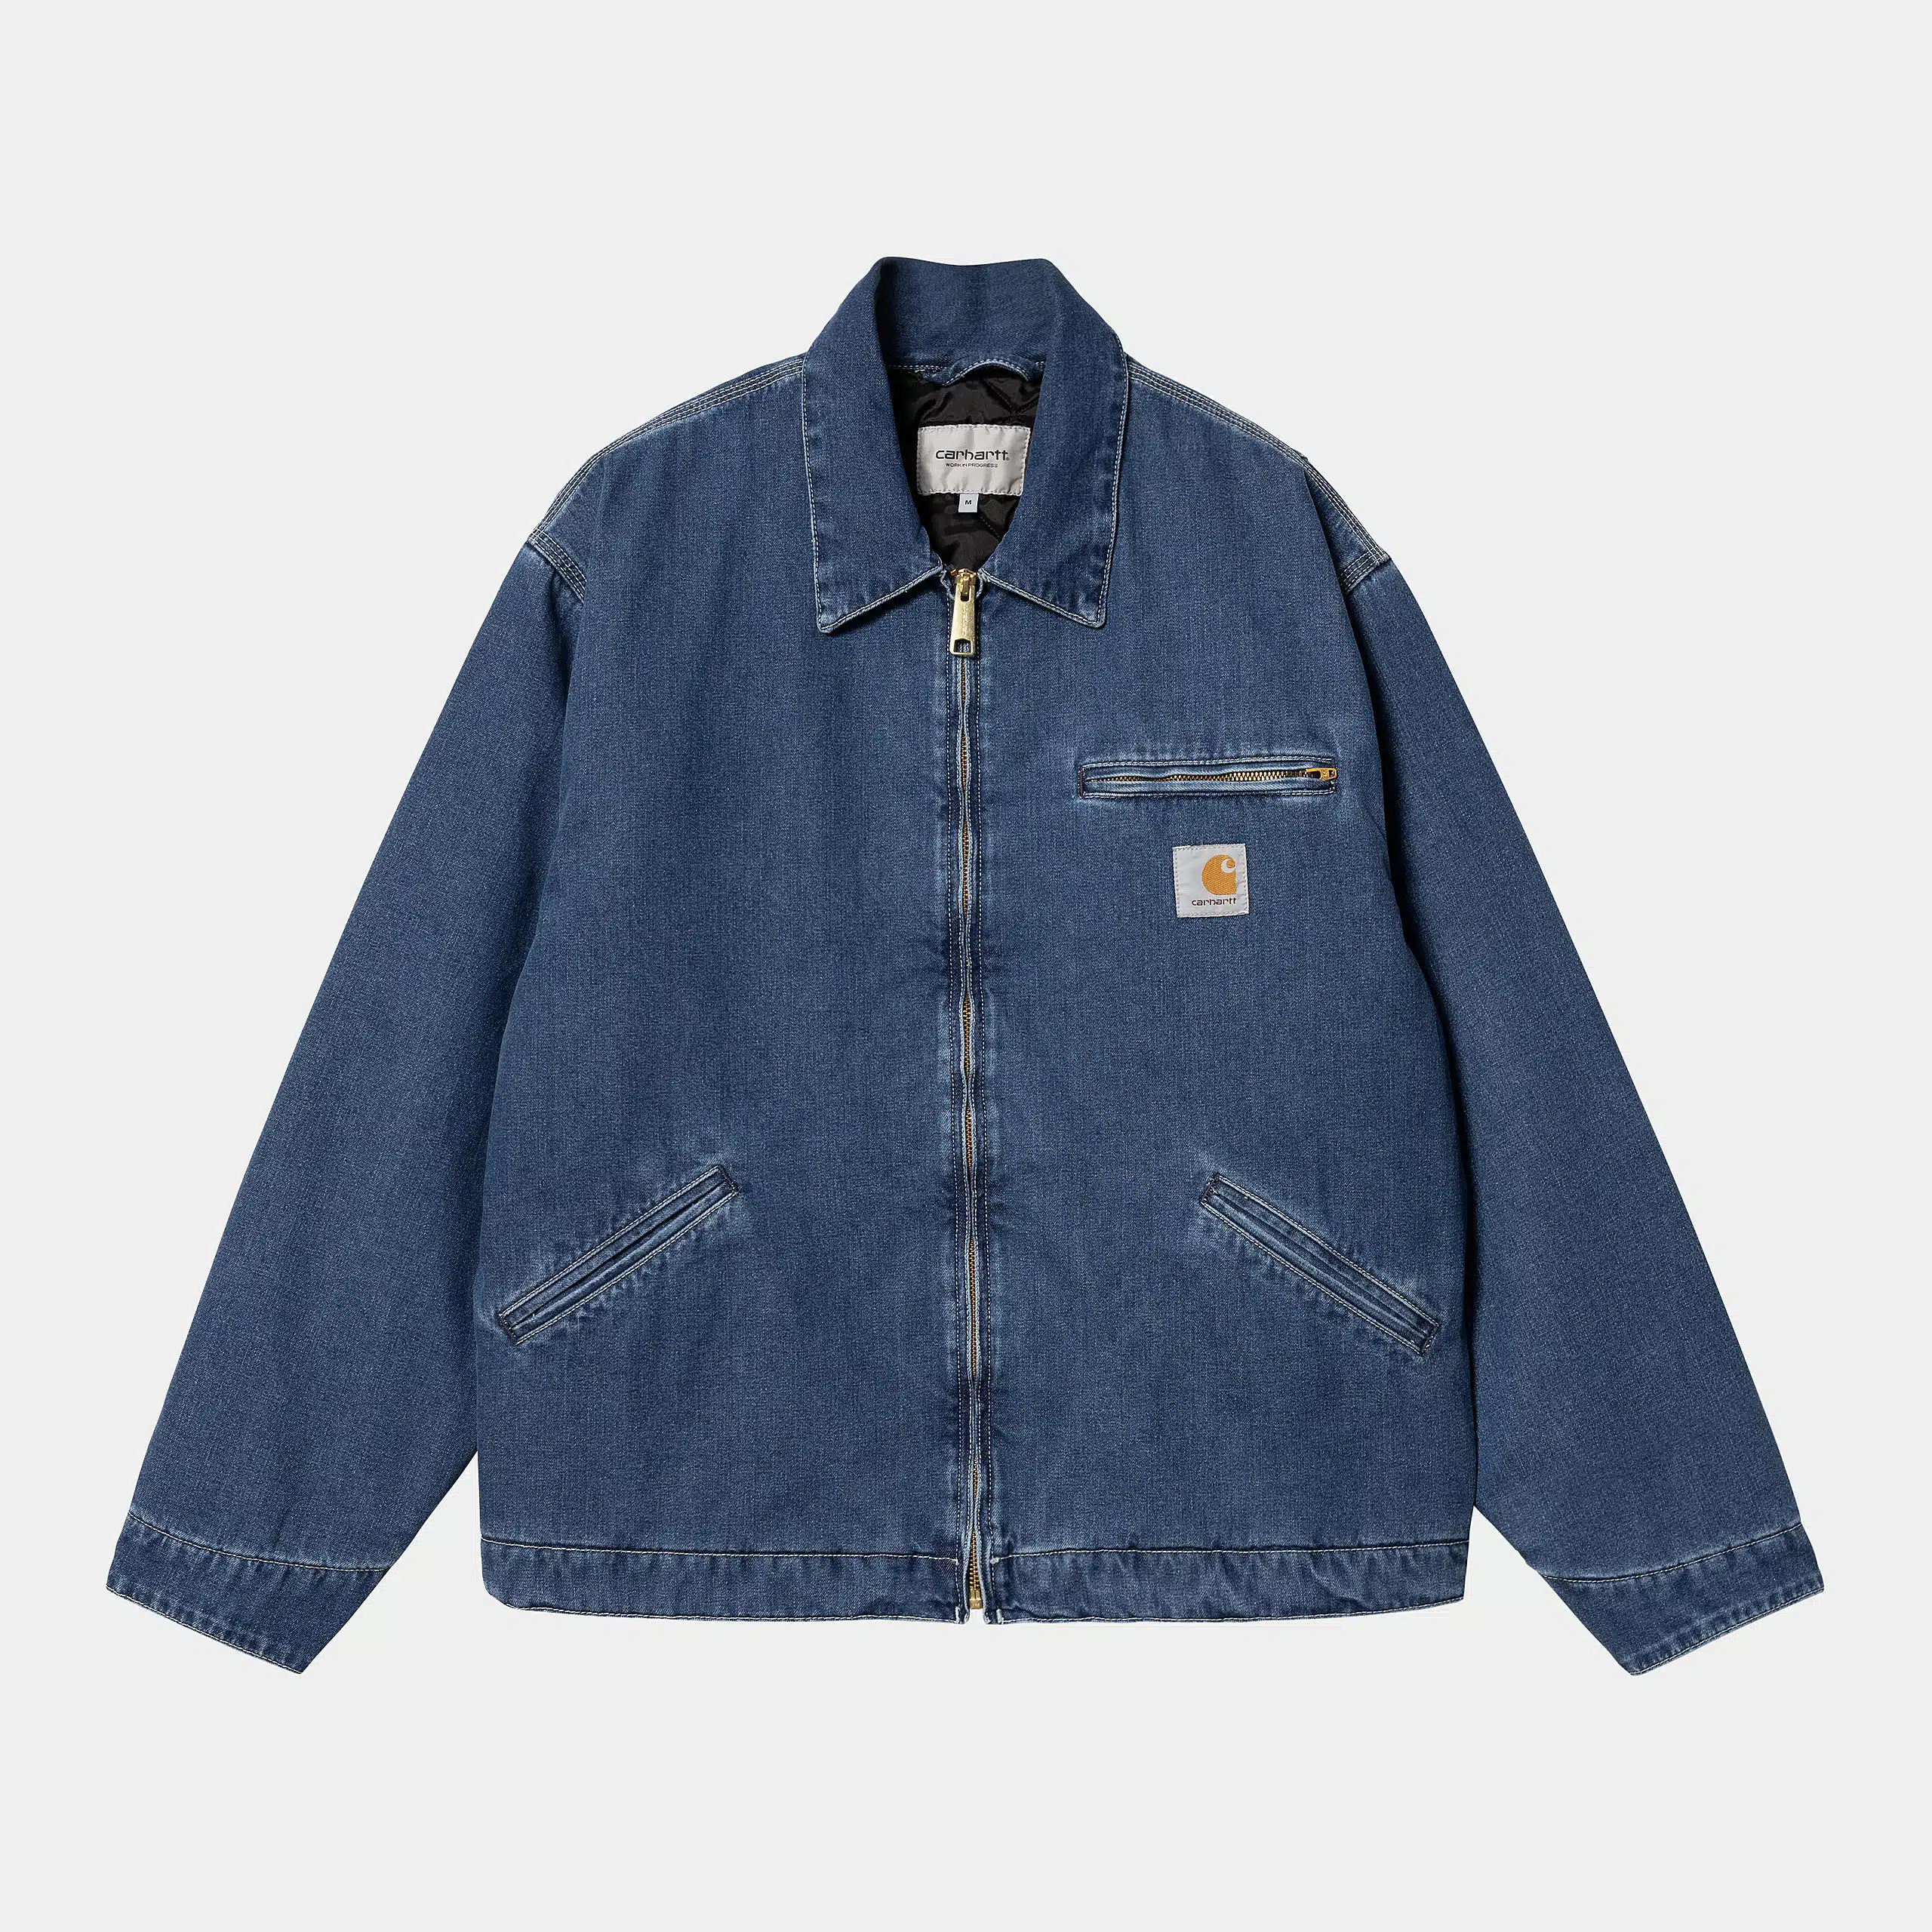 Buy Carhartt WIP OG Detroit Jacket Stone Washed Blue - Scandinavian Fashion  Store